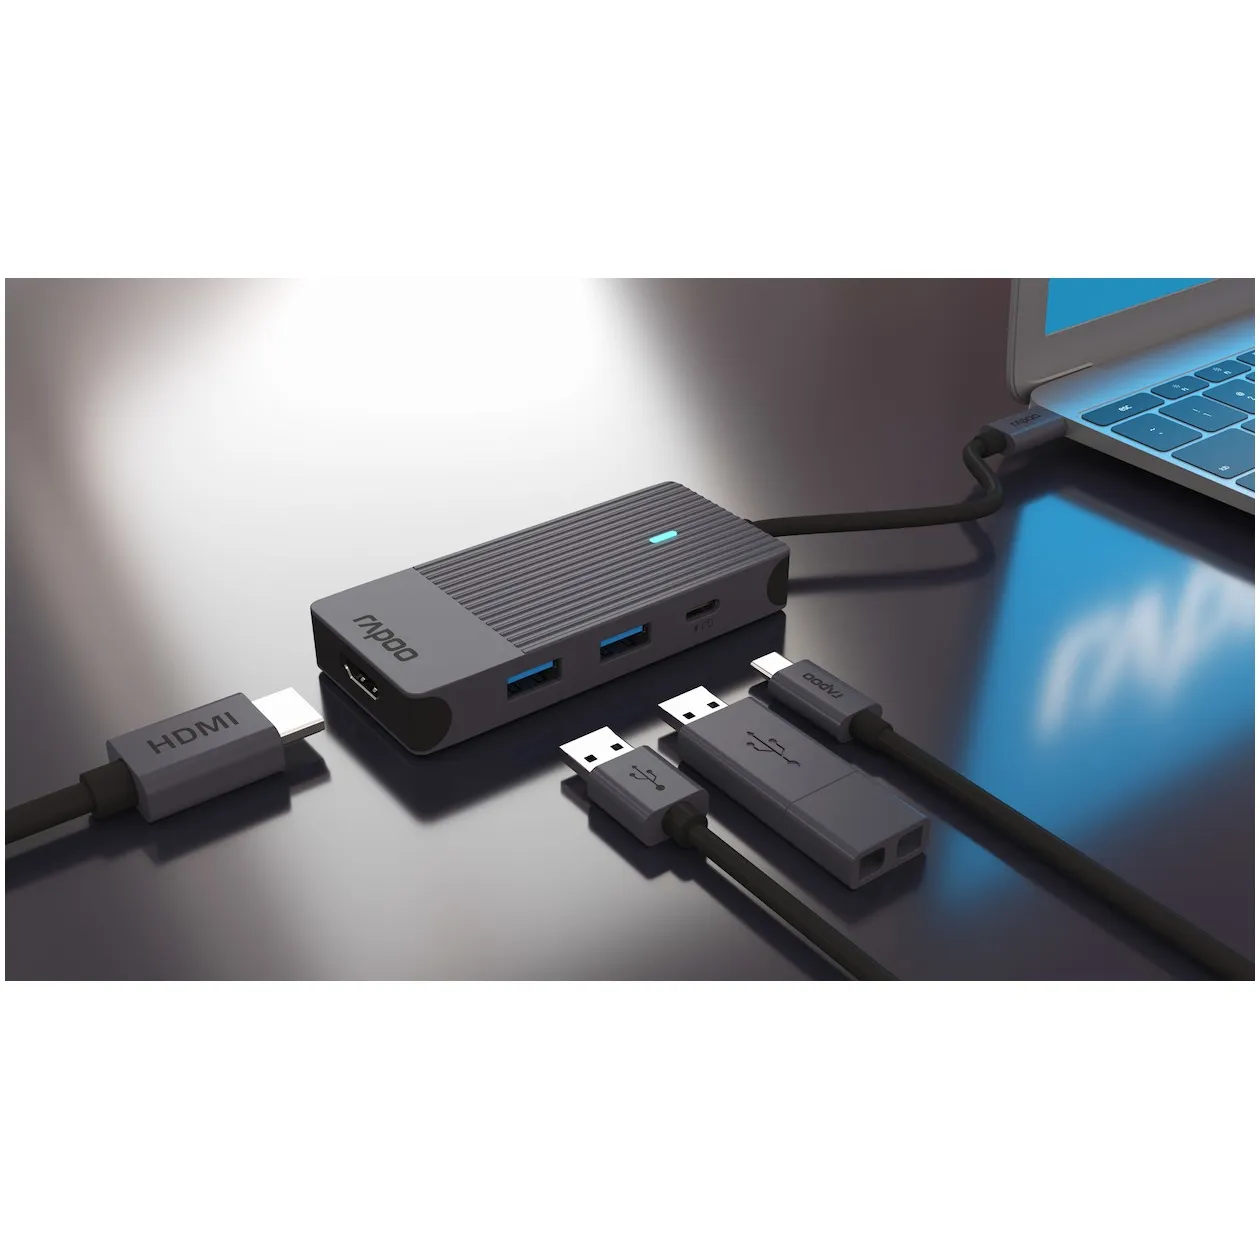 Rapoo UCM-2001 USB-C Adapter 4-in-1